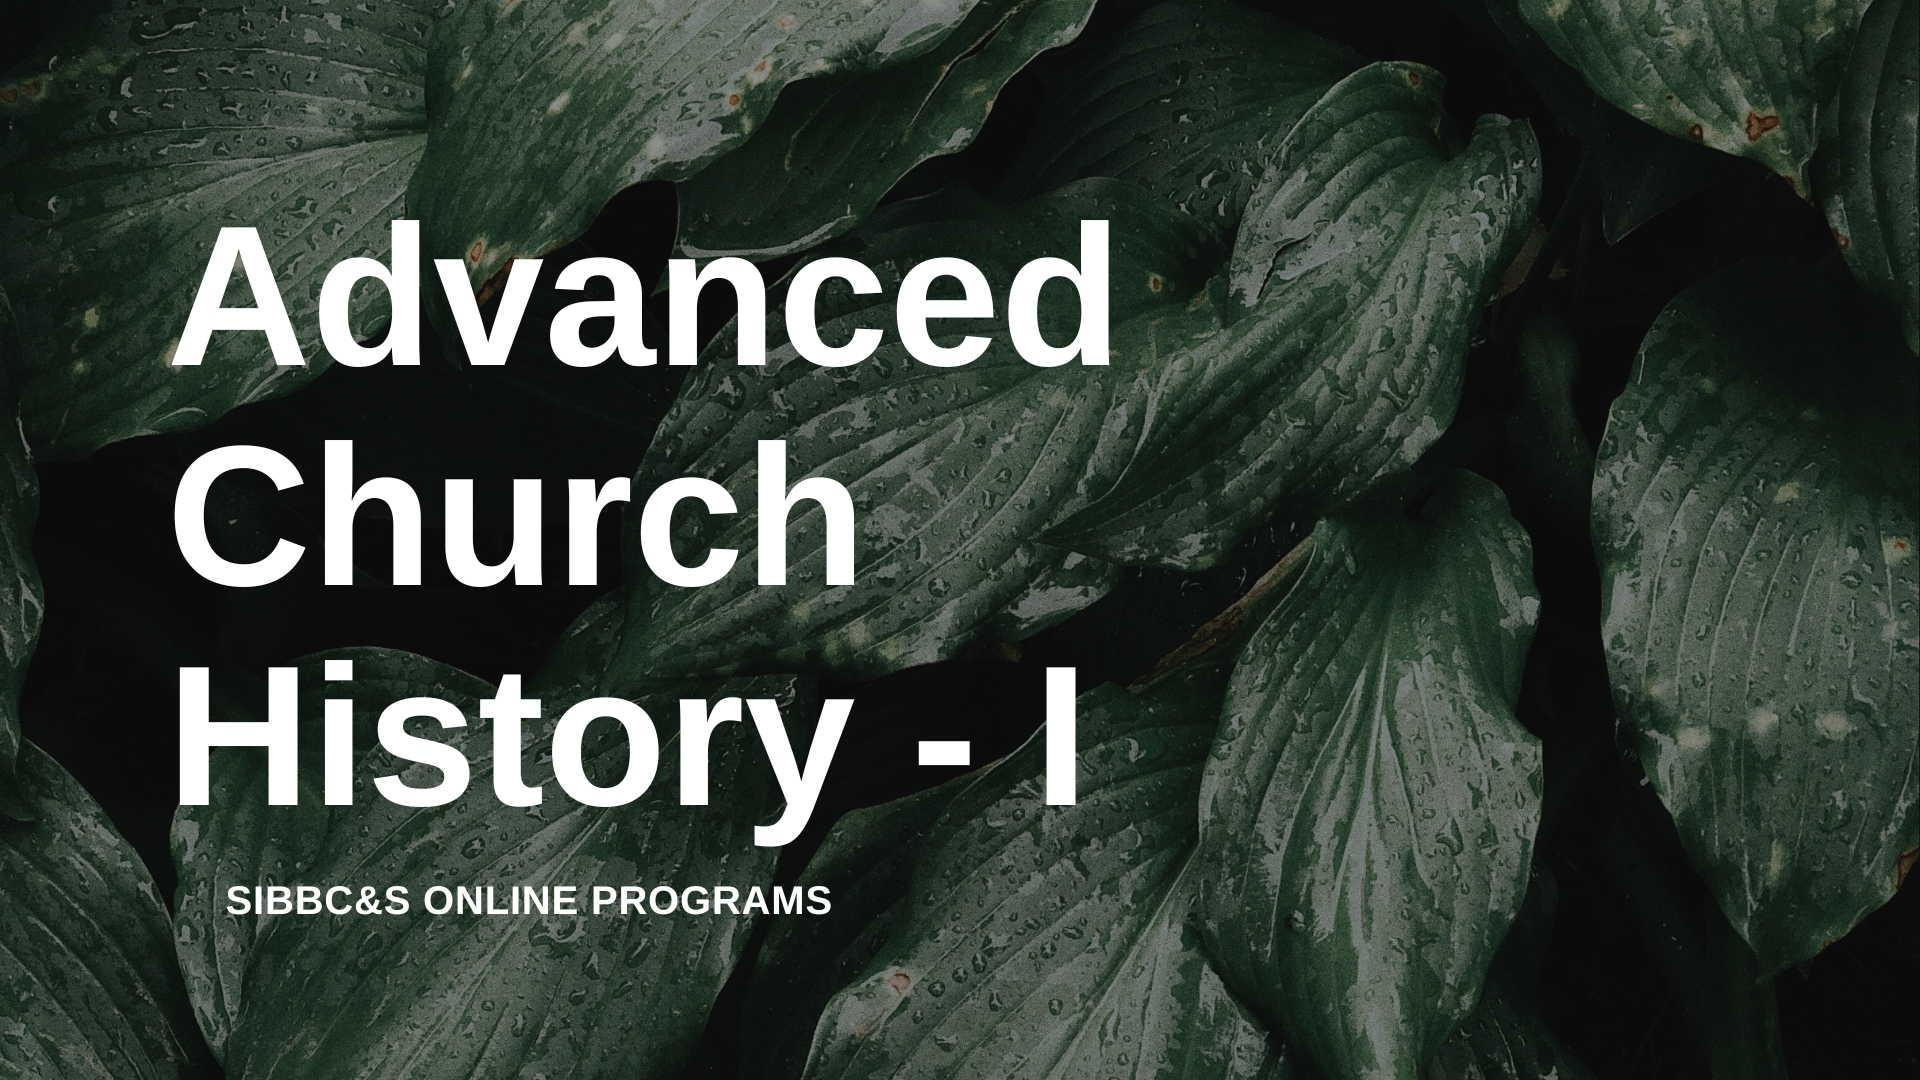 Advanced Church History - I